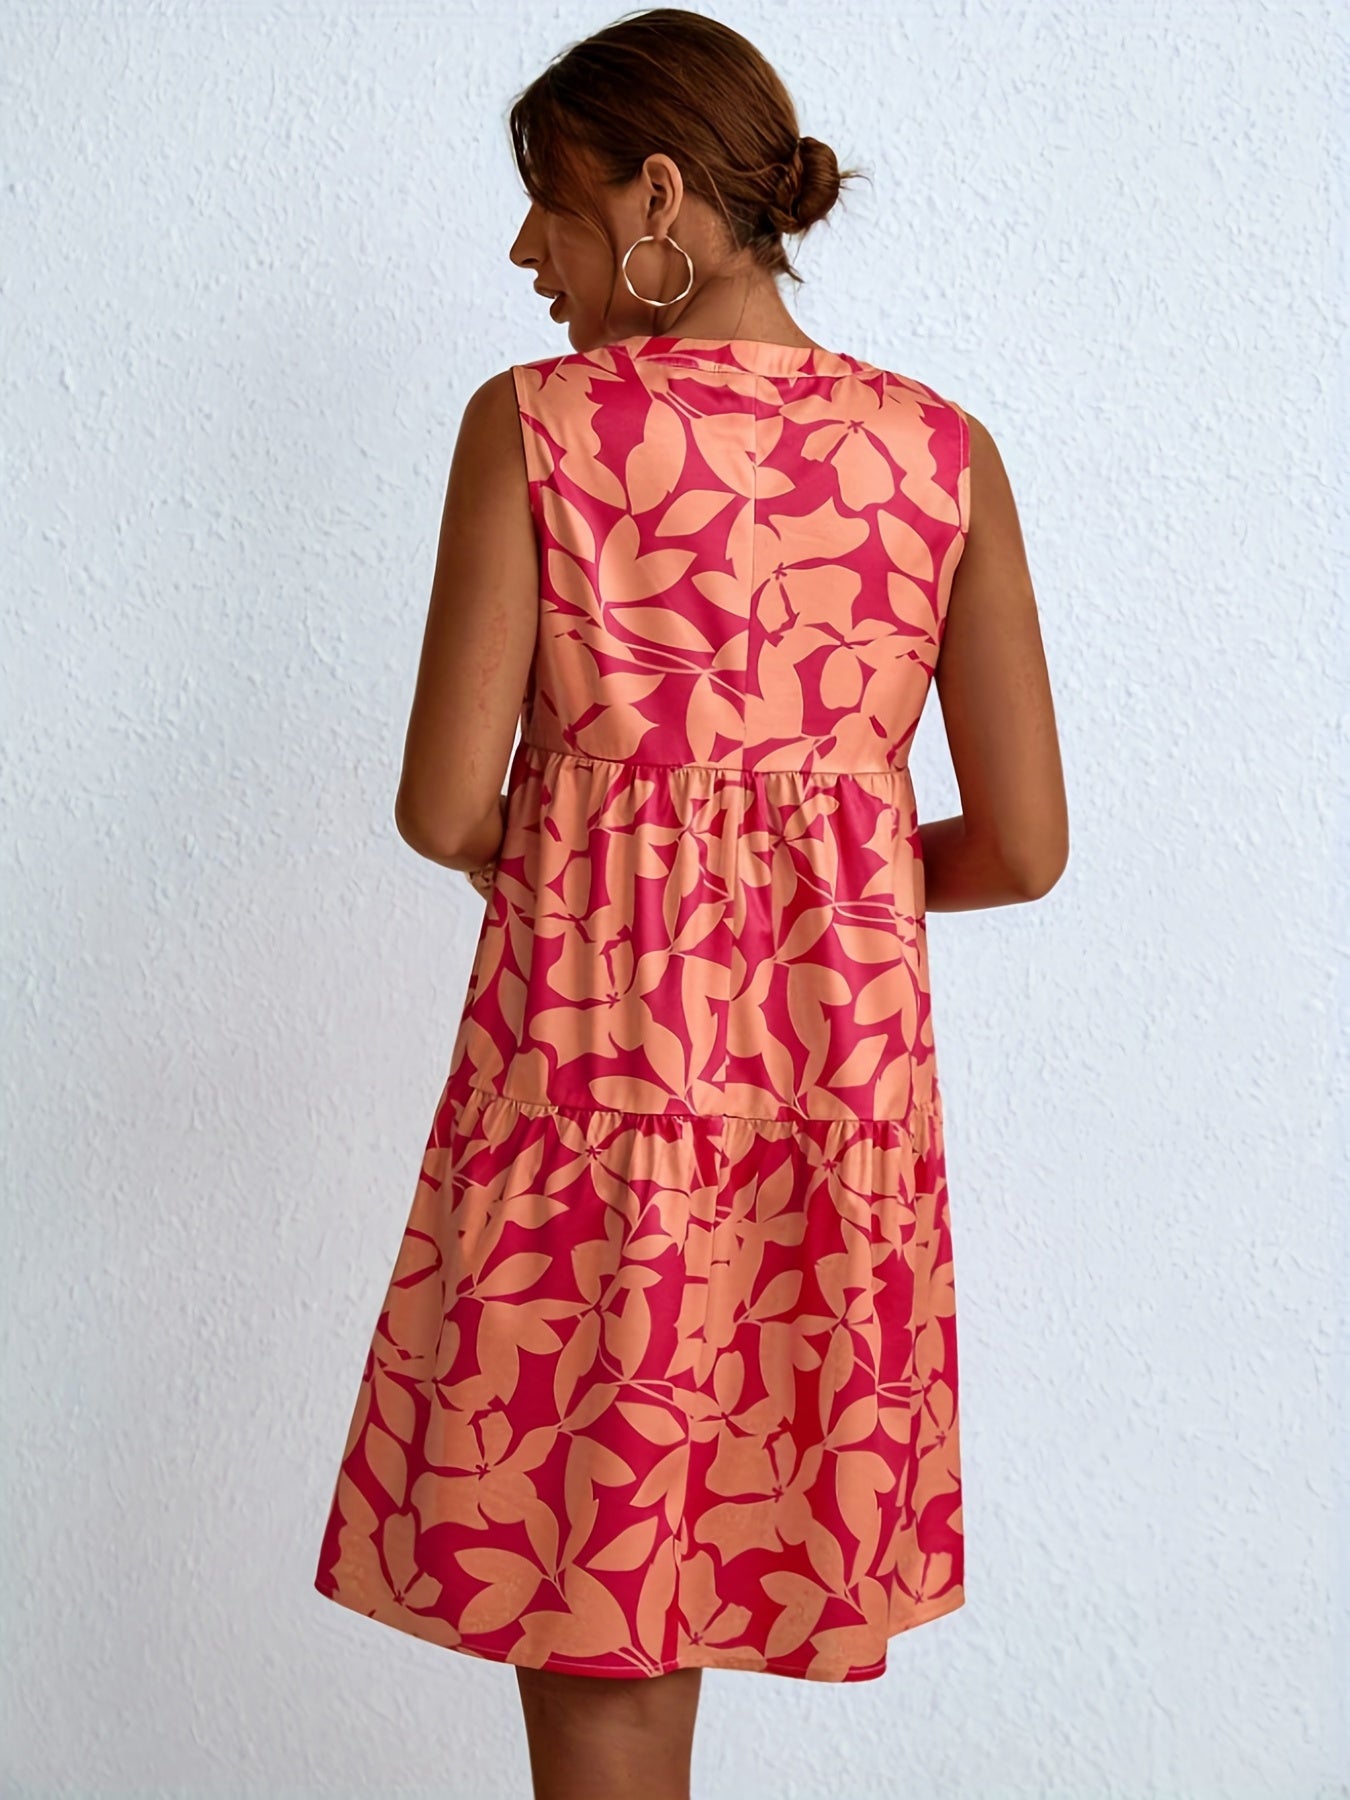 「lovevop」Floral Print Ruffle Hem Dress, Casual Notched Neck Sleeveless Tank Dress, Women's Clothing